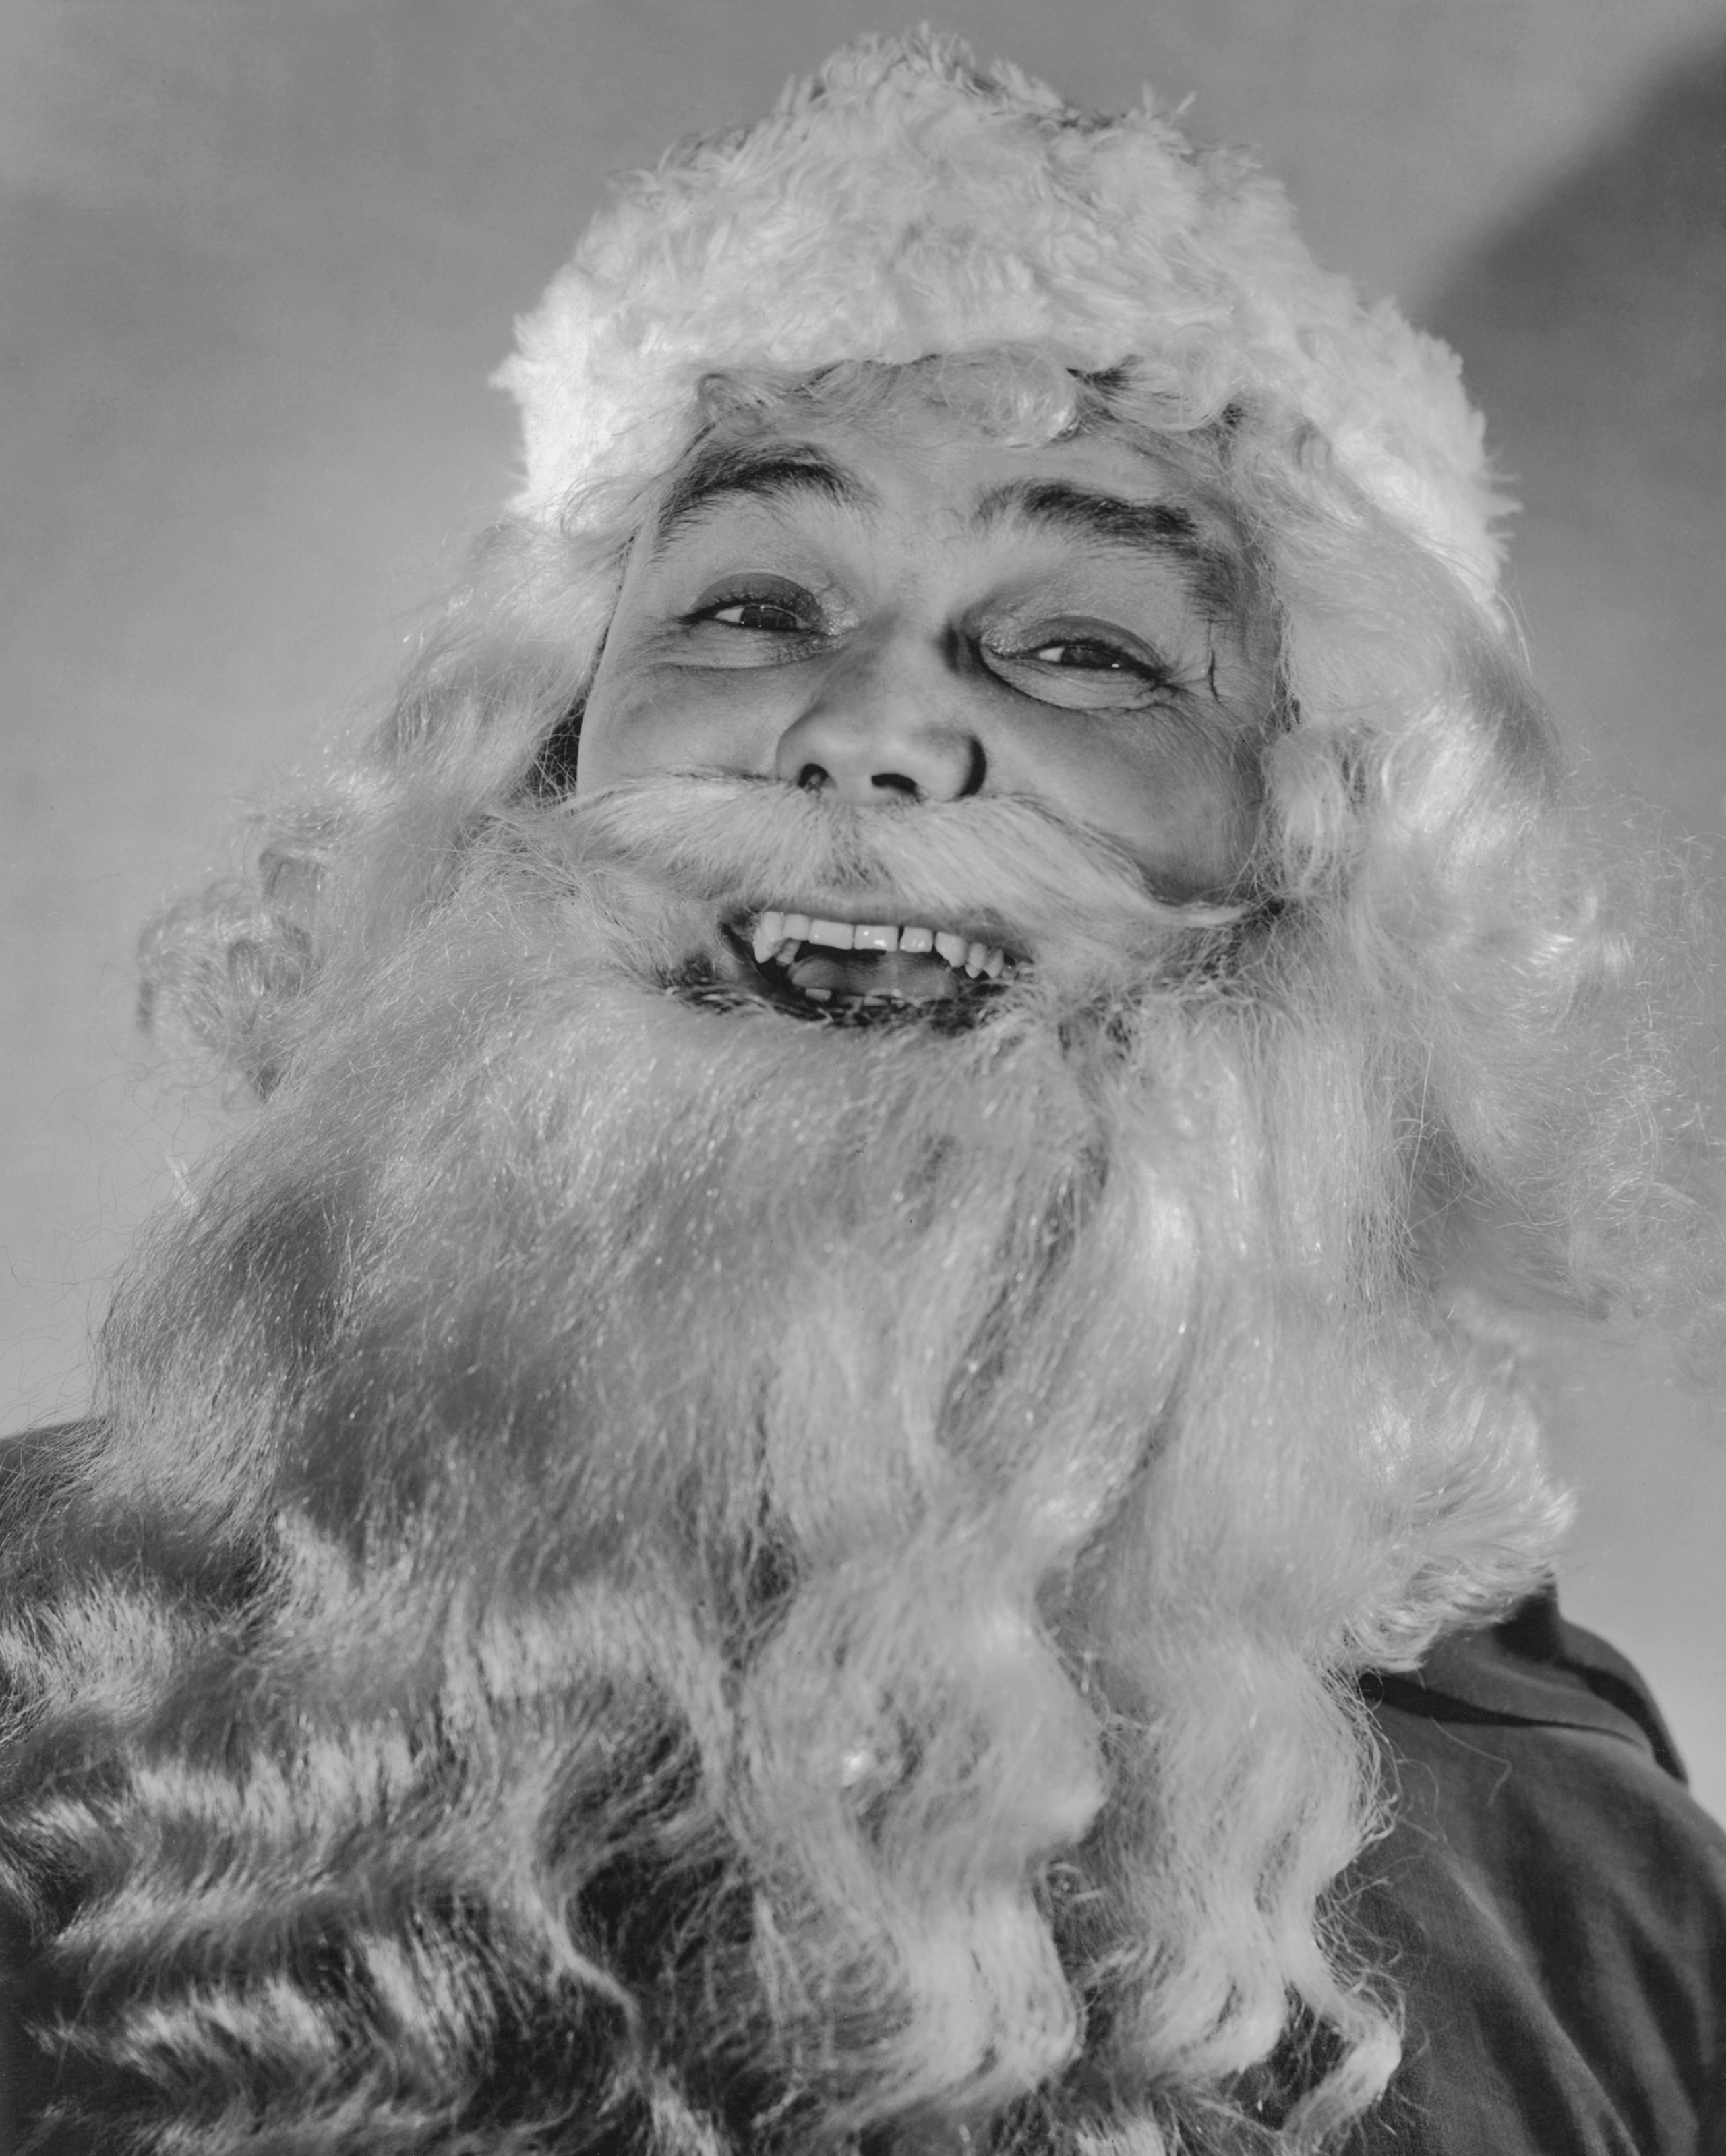 Santa Claus laughing in 1935.